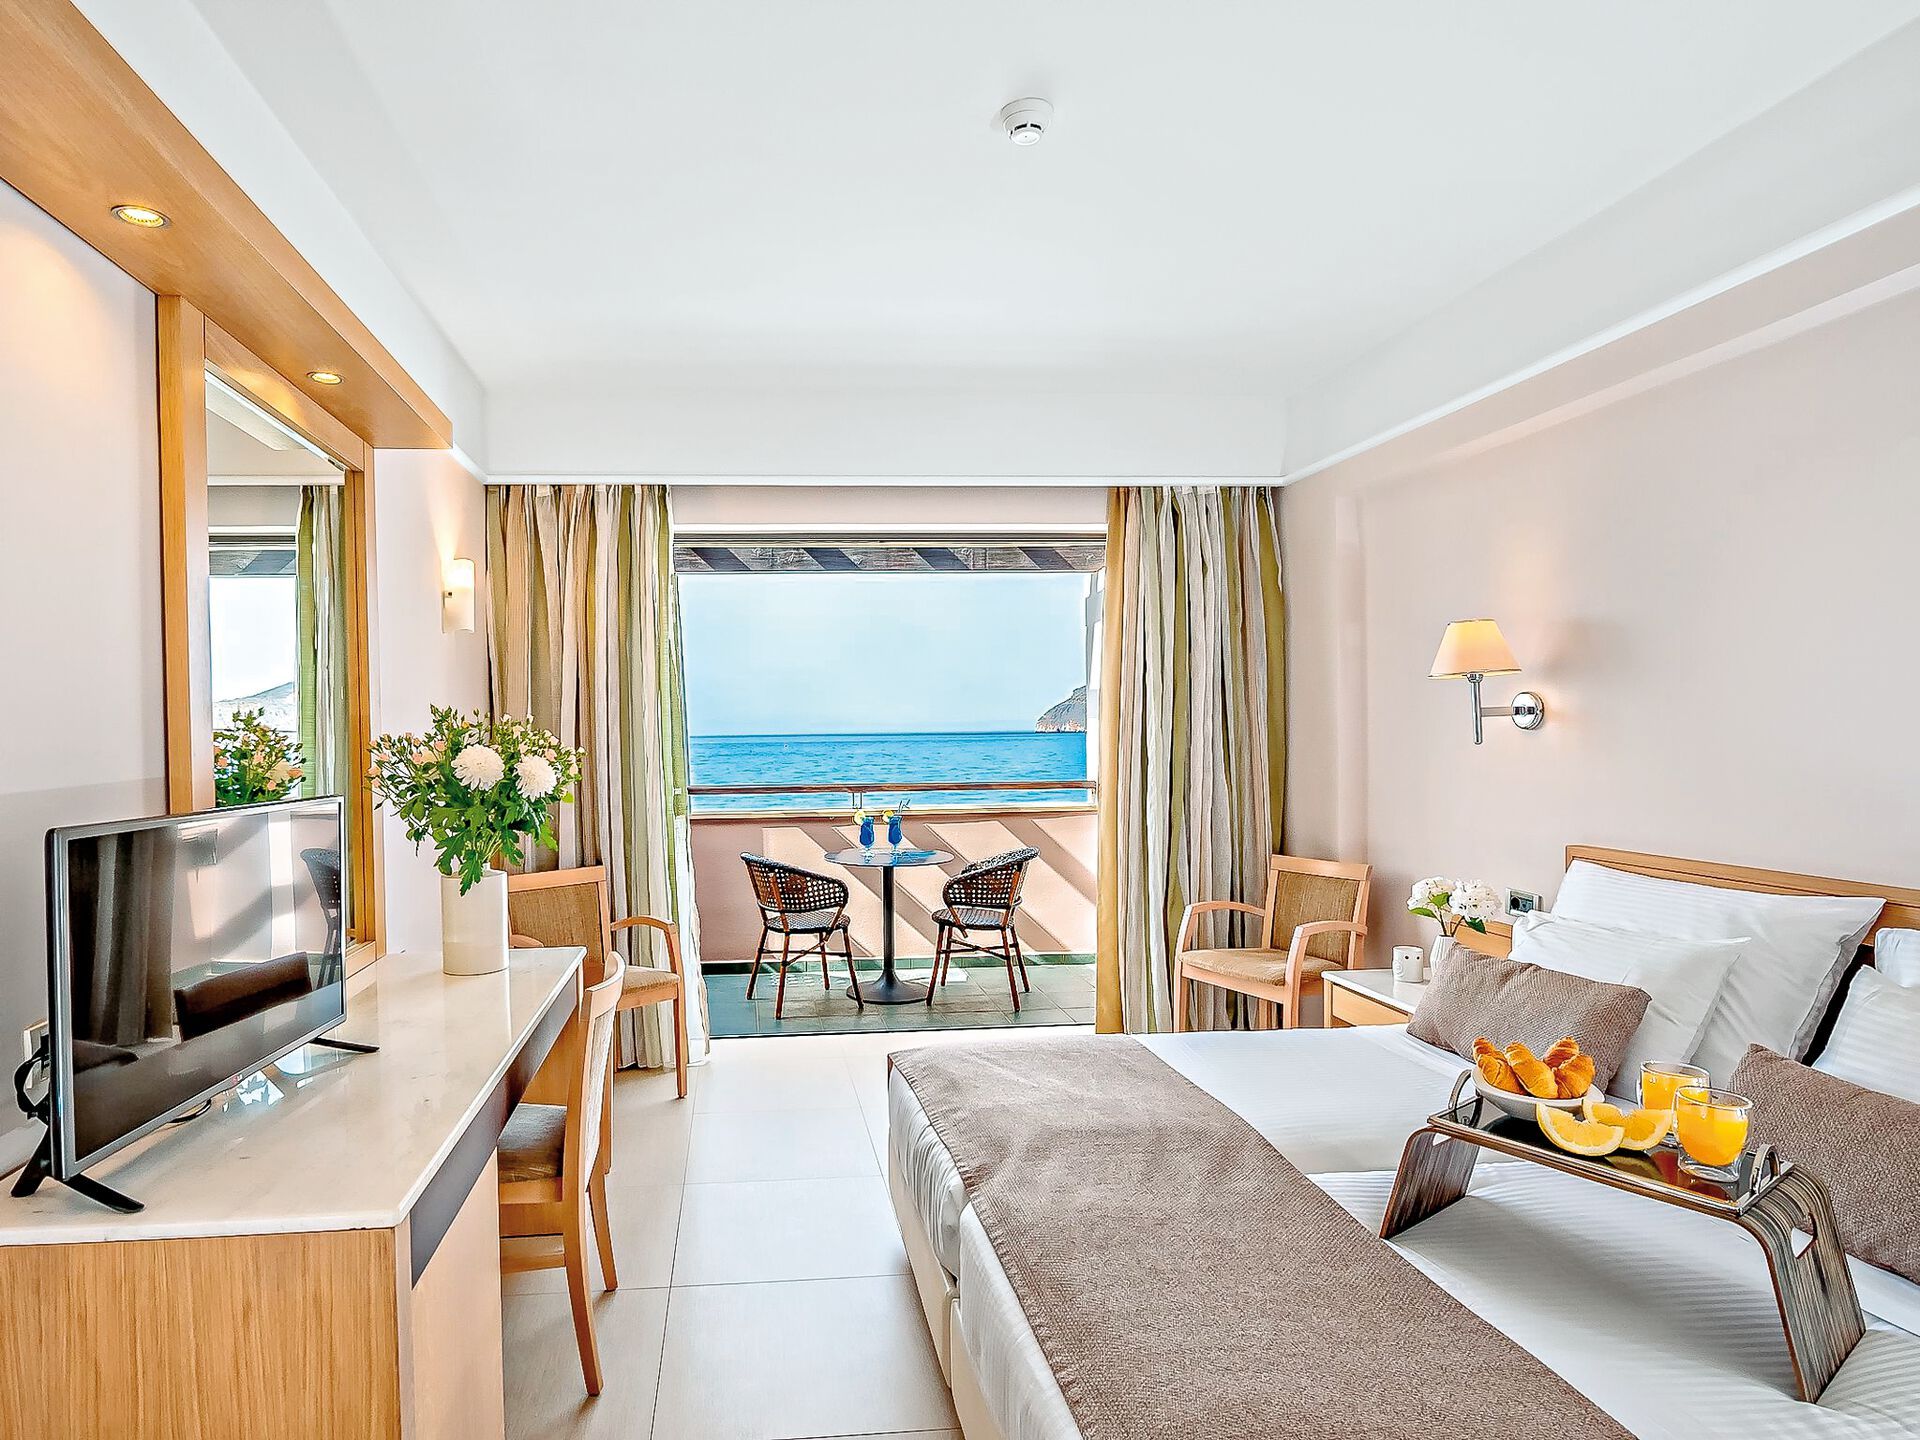 Crète - La Canée - Grèce - Iles grecques - Hotel Porto Platanias Beach Resort & Spa 5*